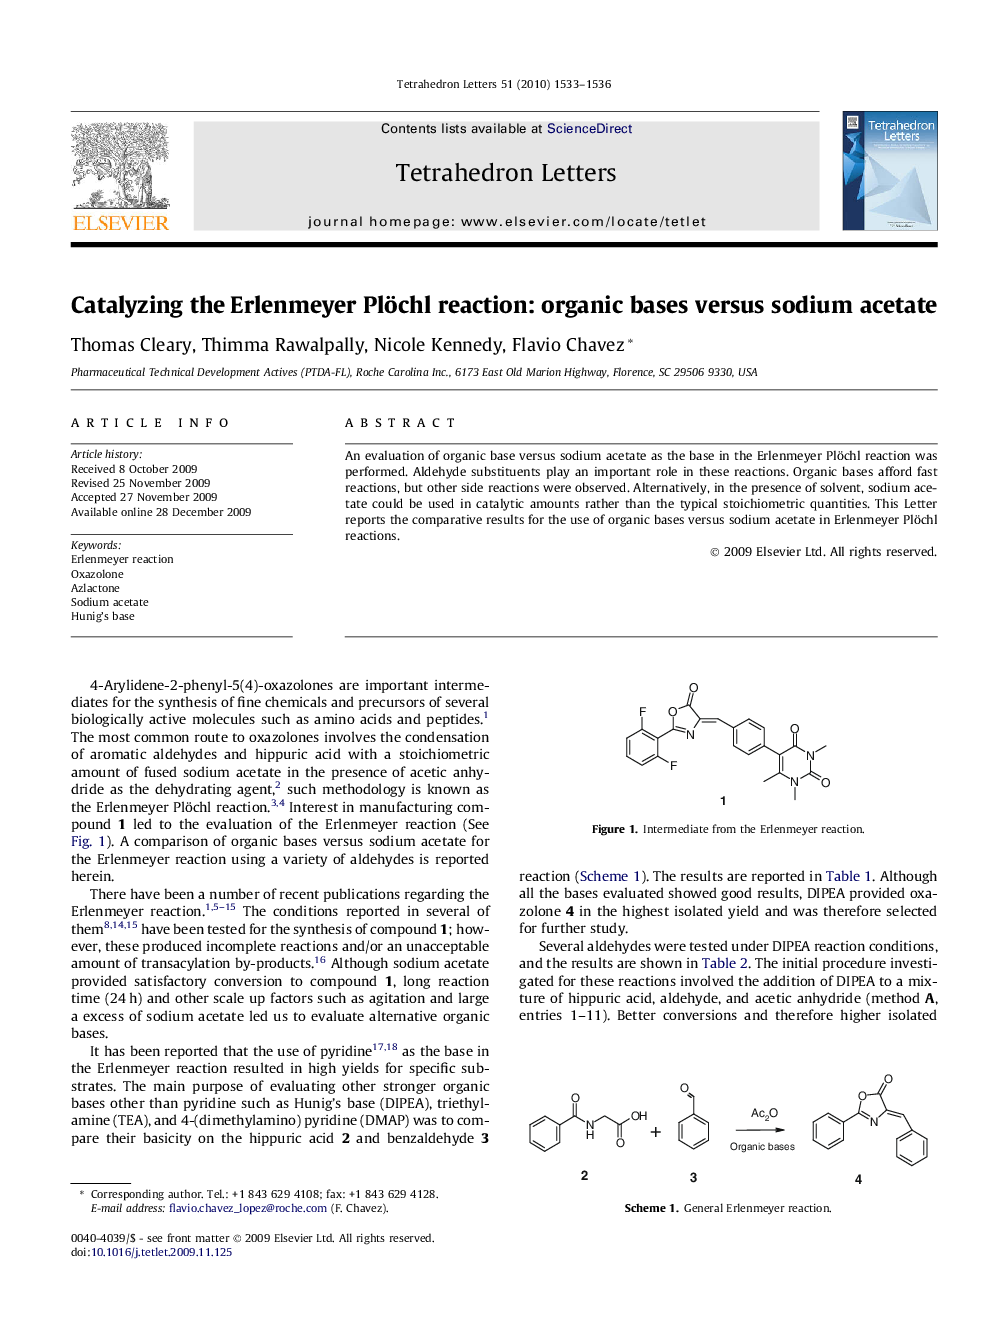 Catalyzing the Erlenmeyer Plöchl reaction: organic bases versus sodium acetate